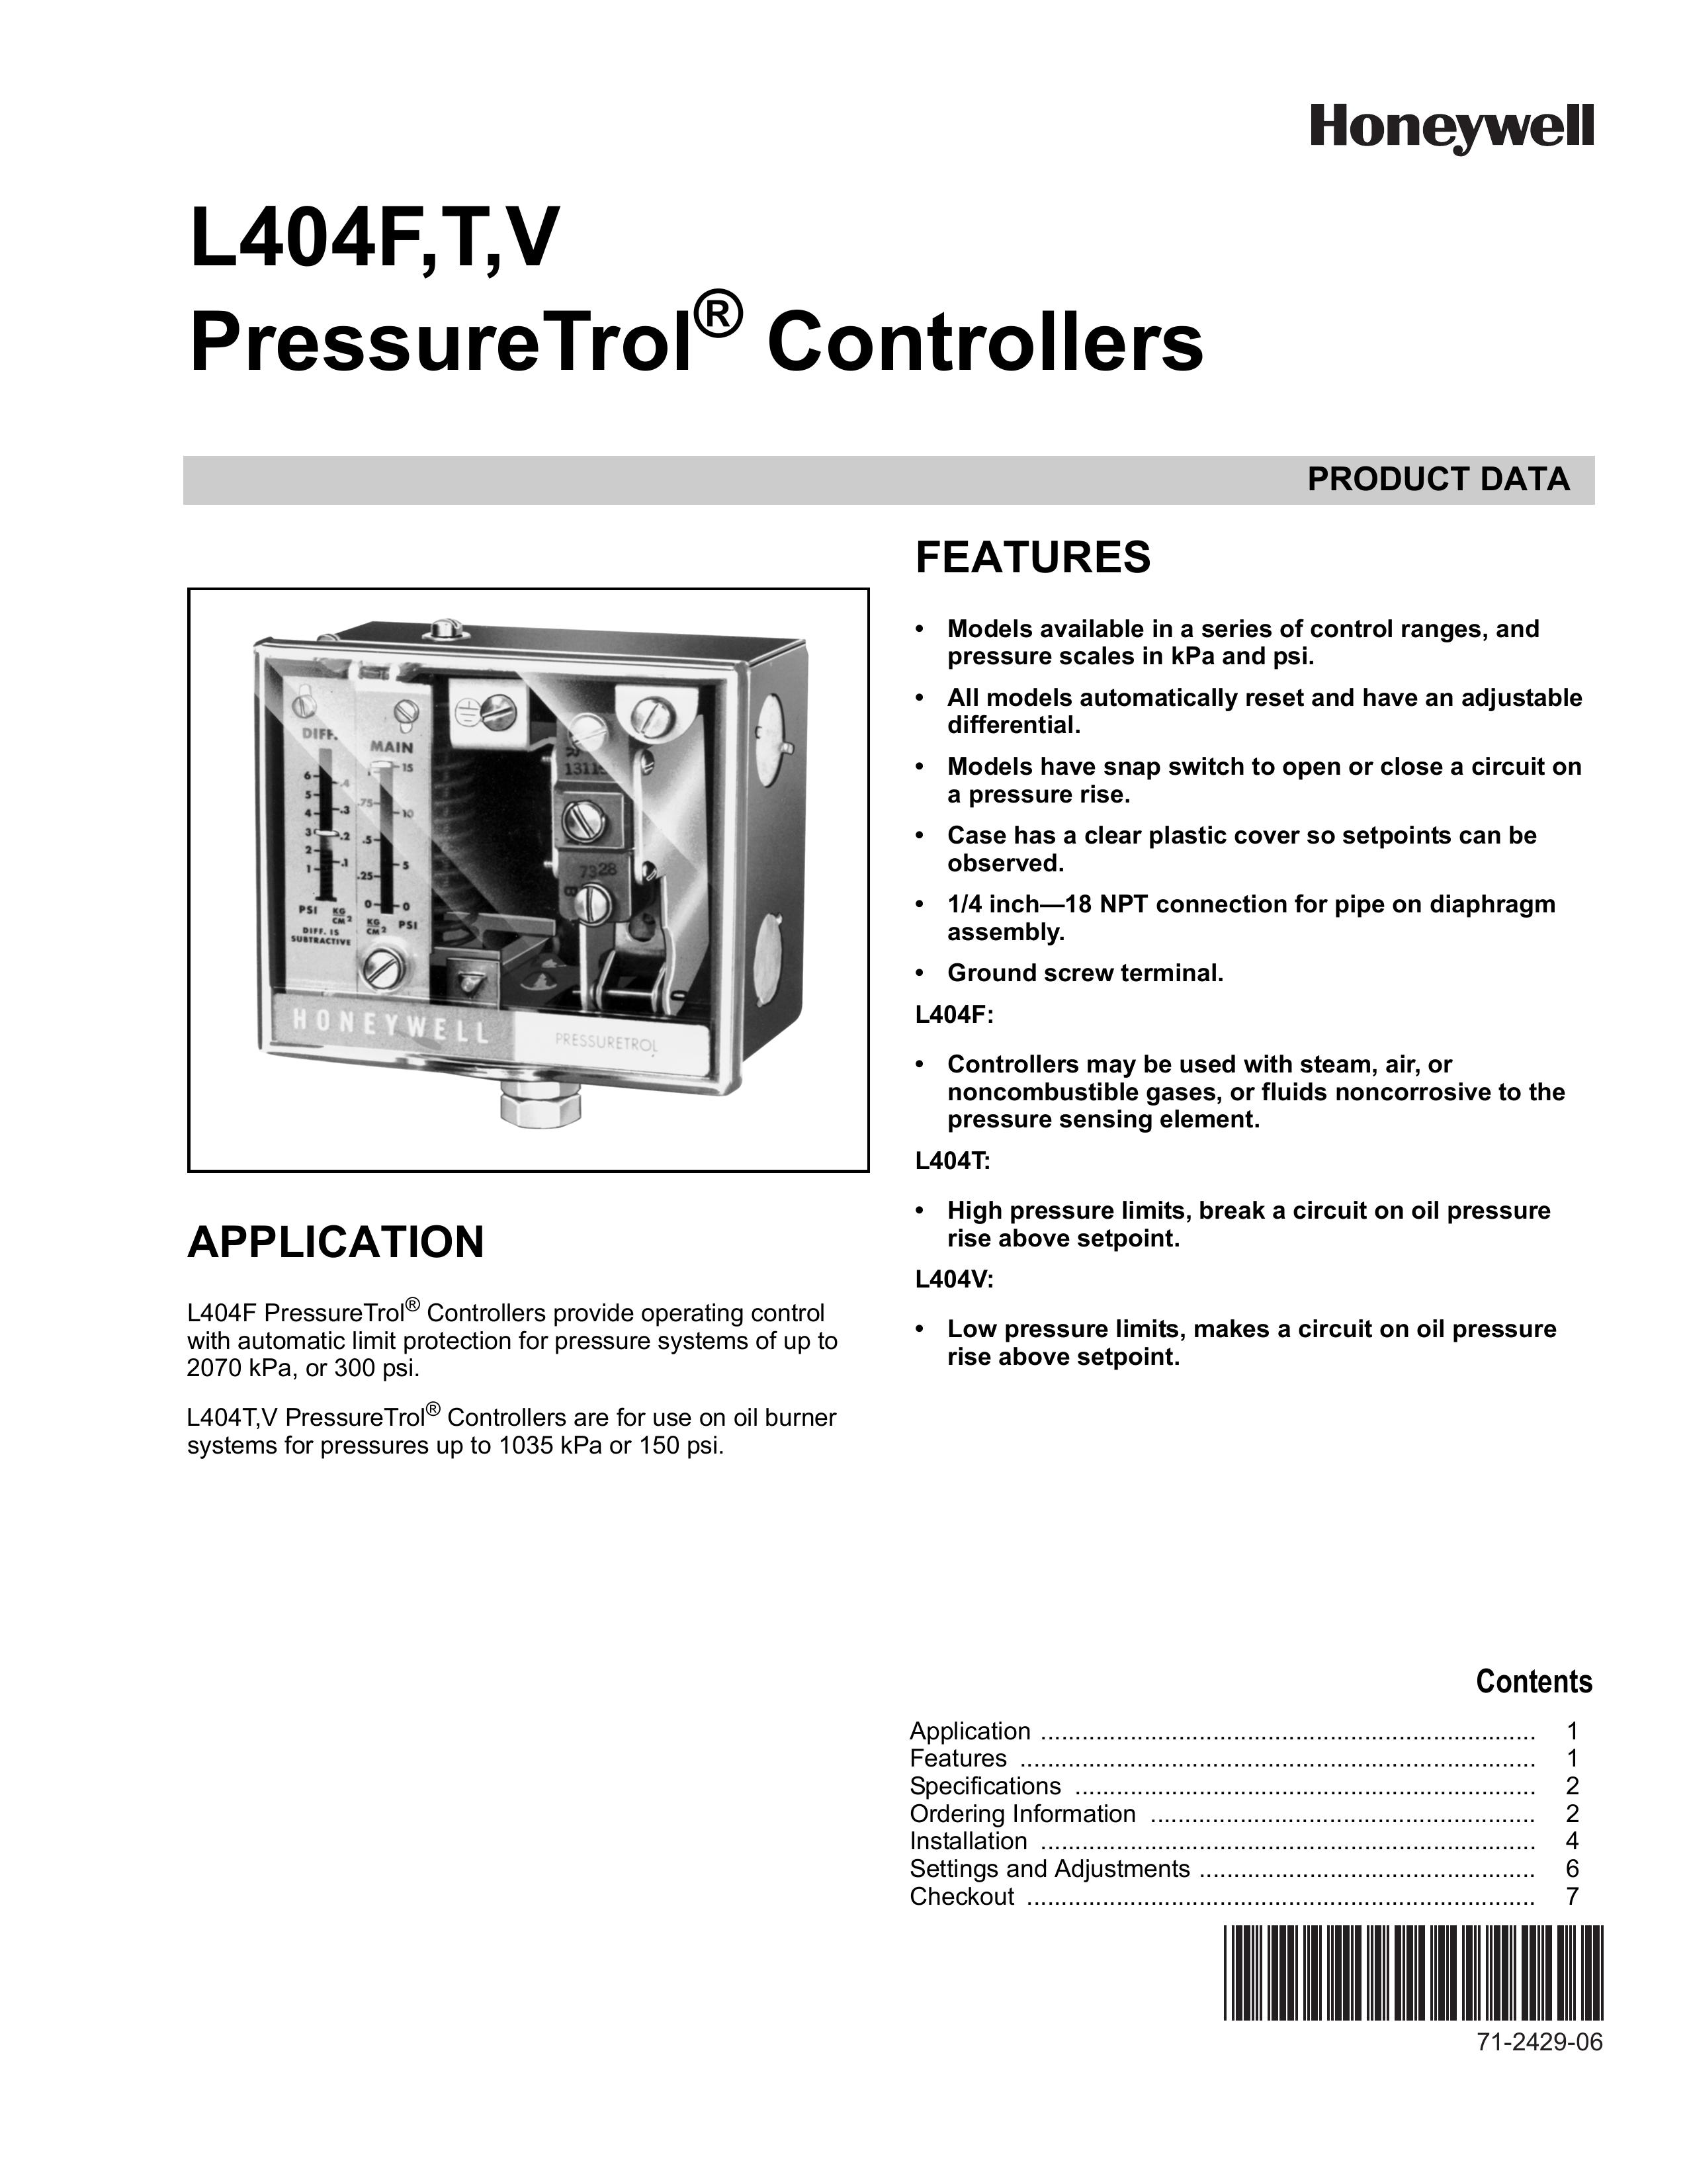 Honeywell L404V Blood Pressure Monitor User Manual